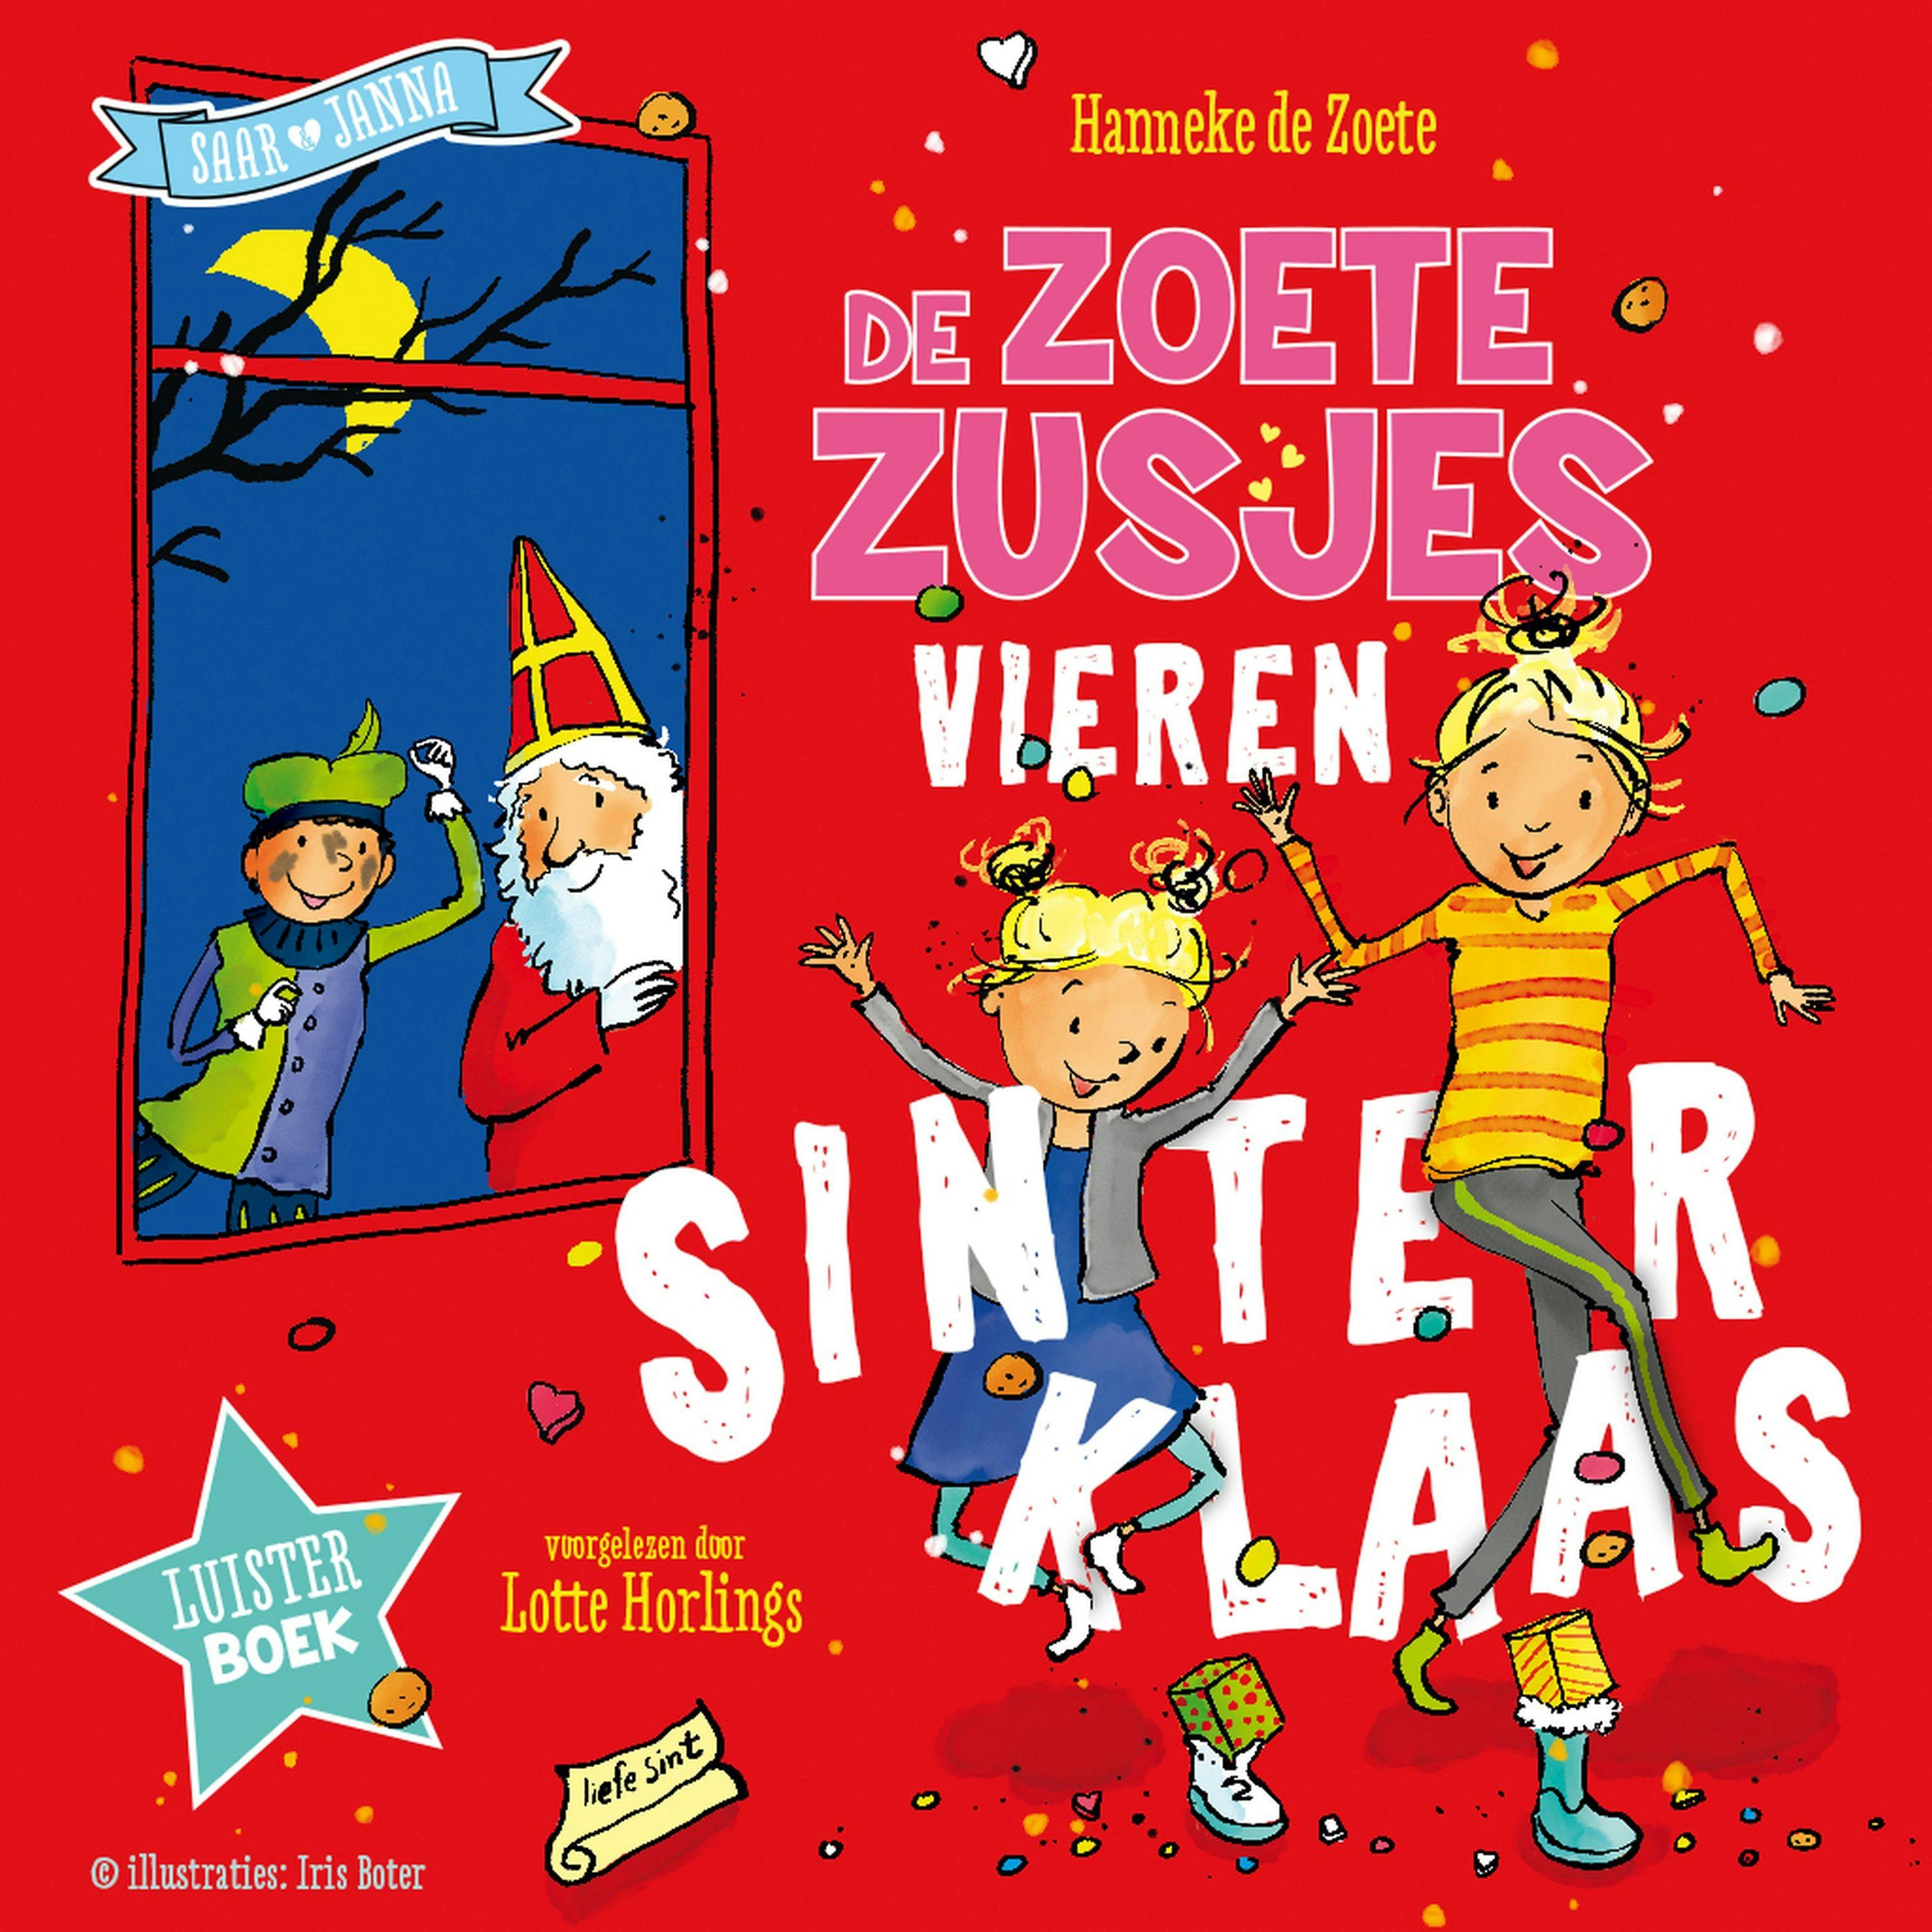 De zoete zusjes vieren Sinterklaas - undefined